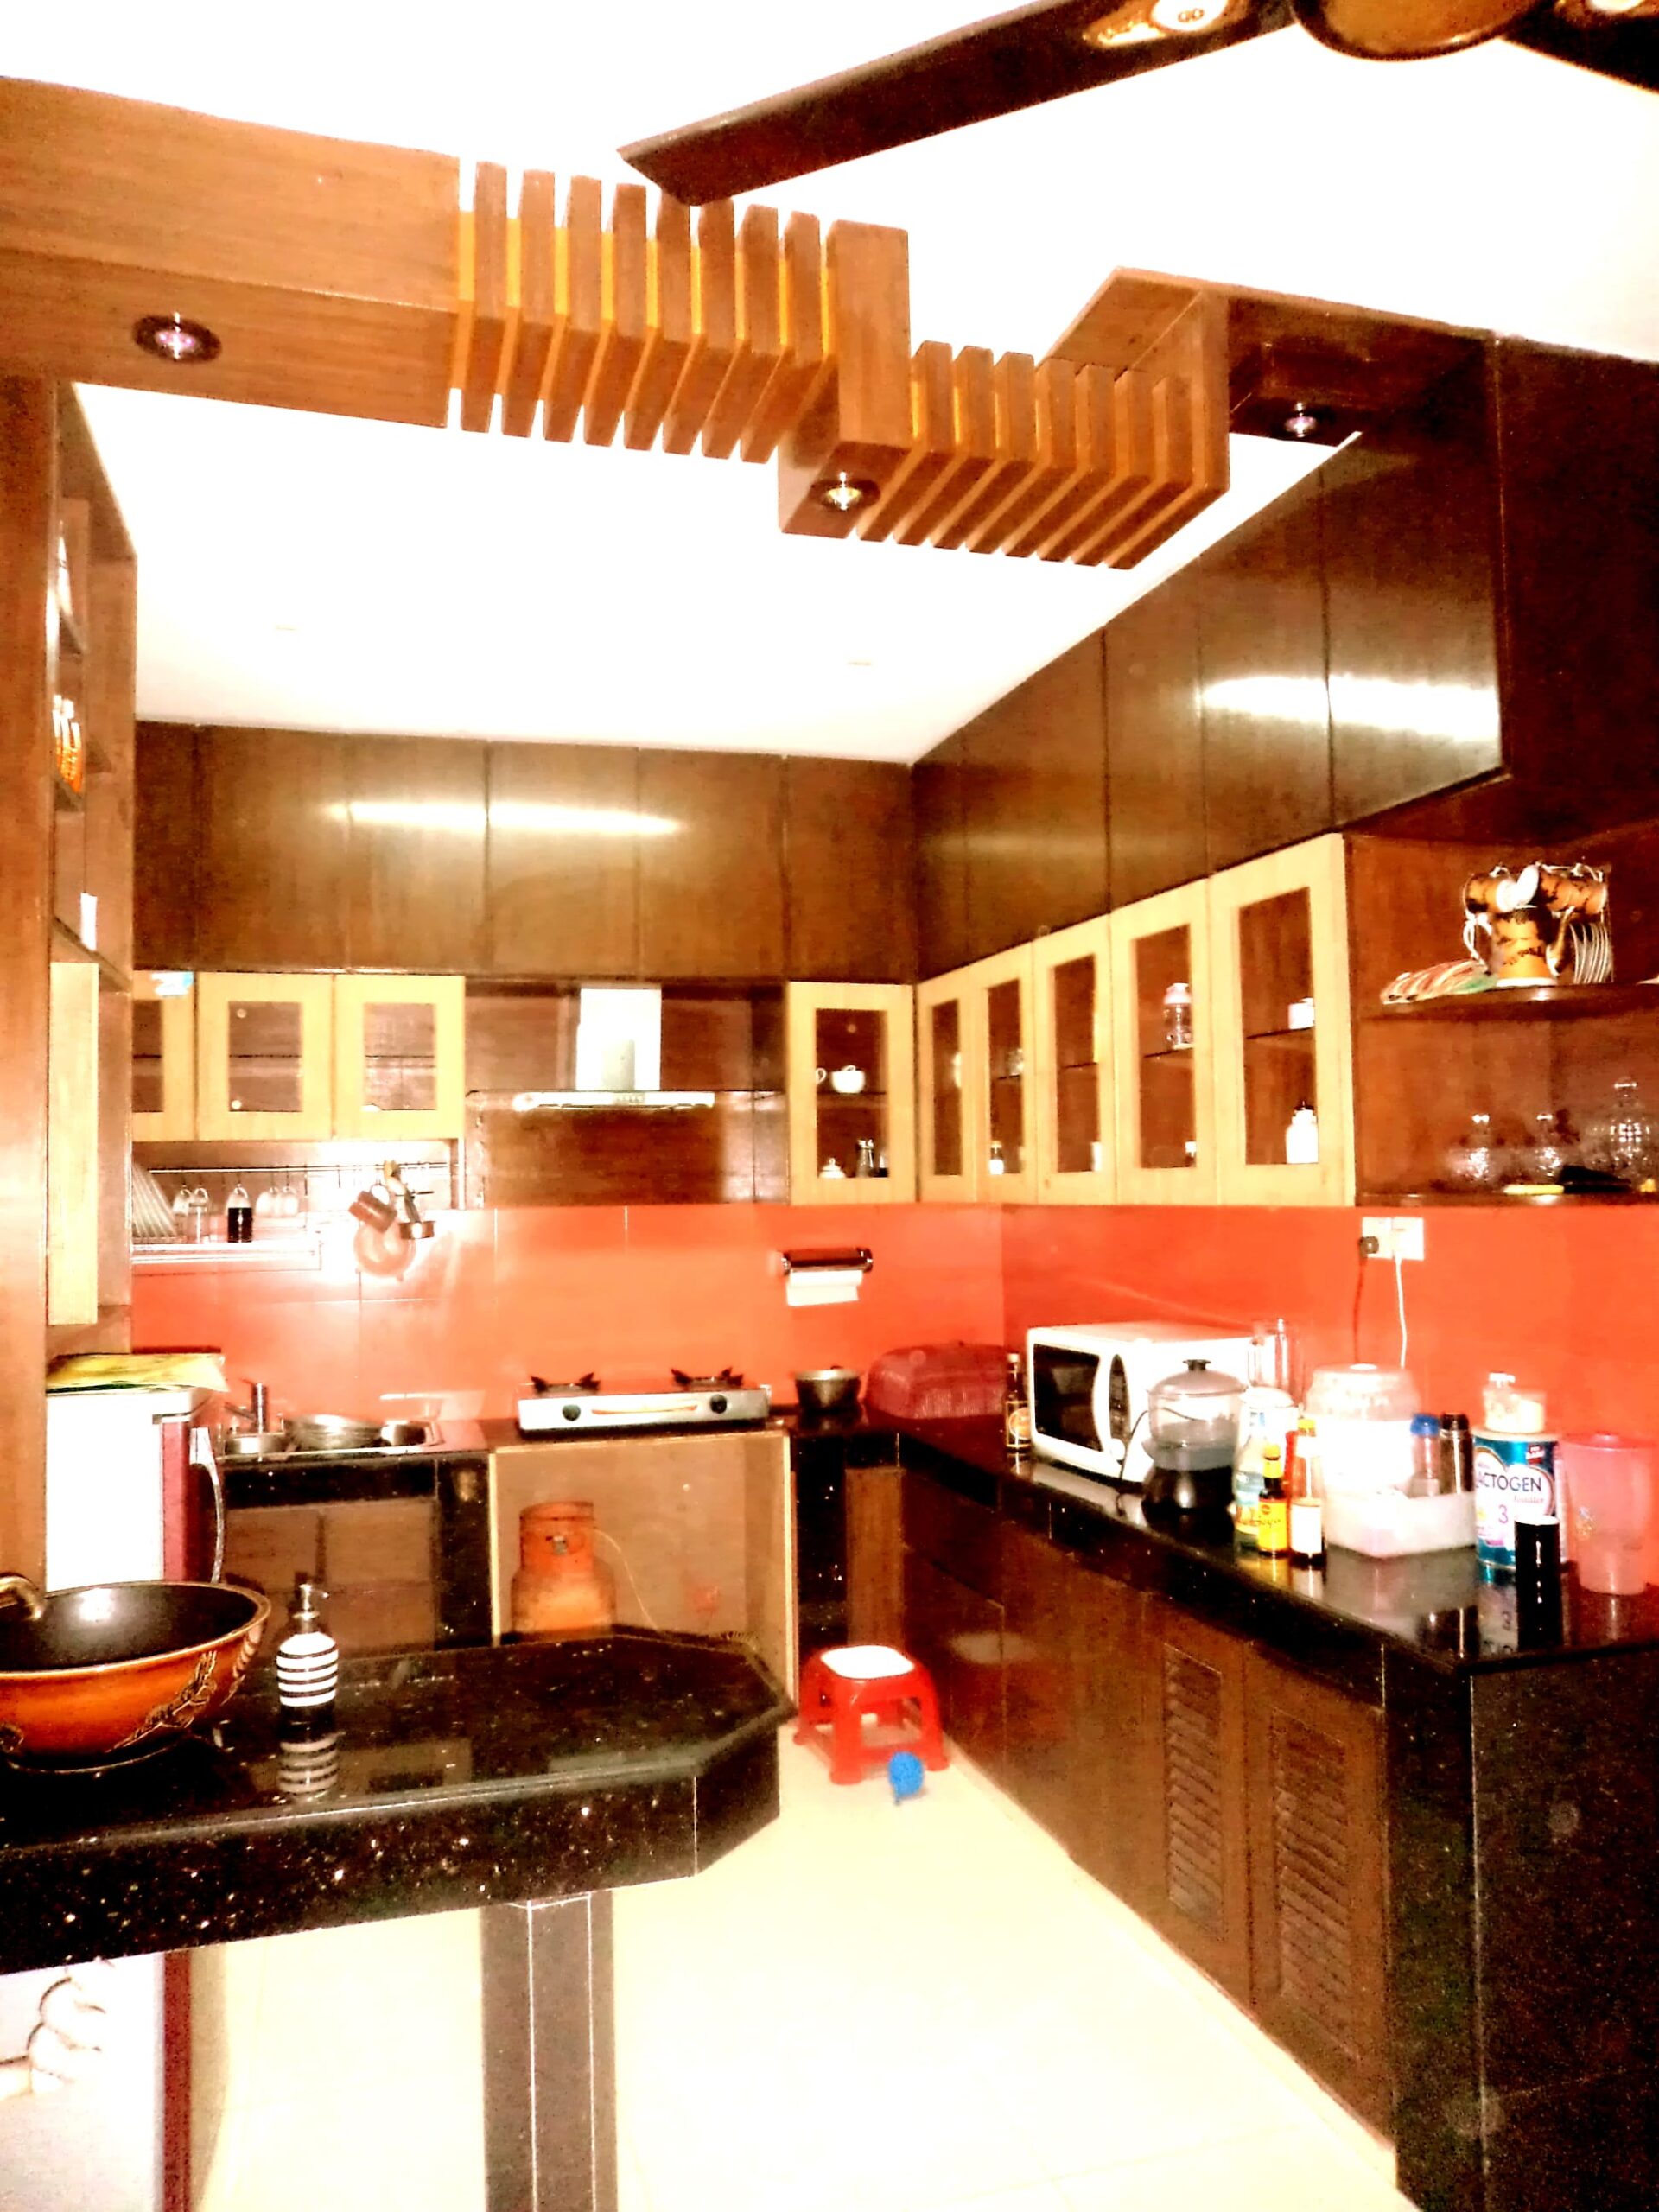 Habiba Dhanmondi Complete Project Kitchen Interior Design (5)